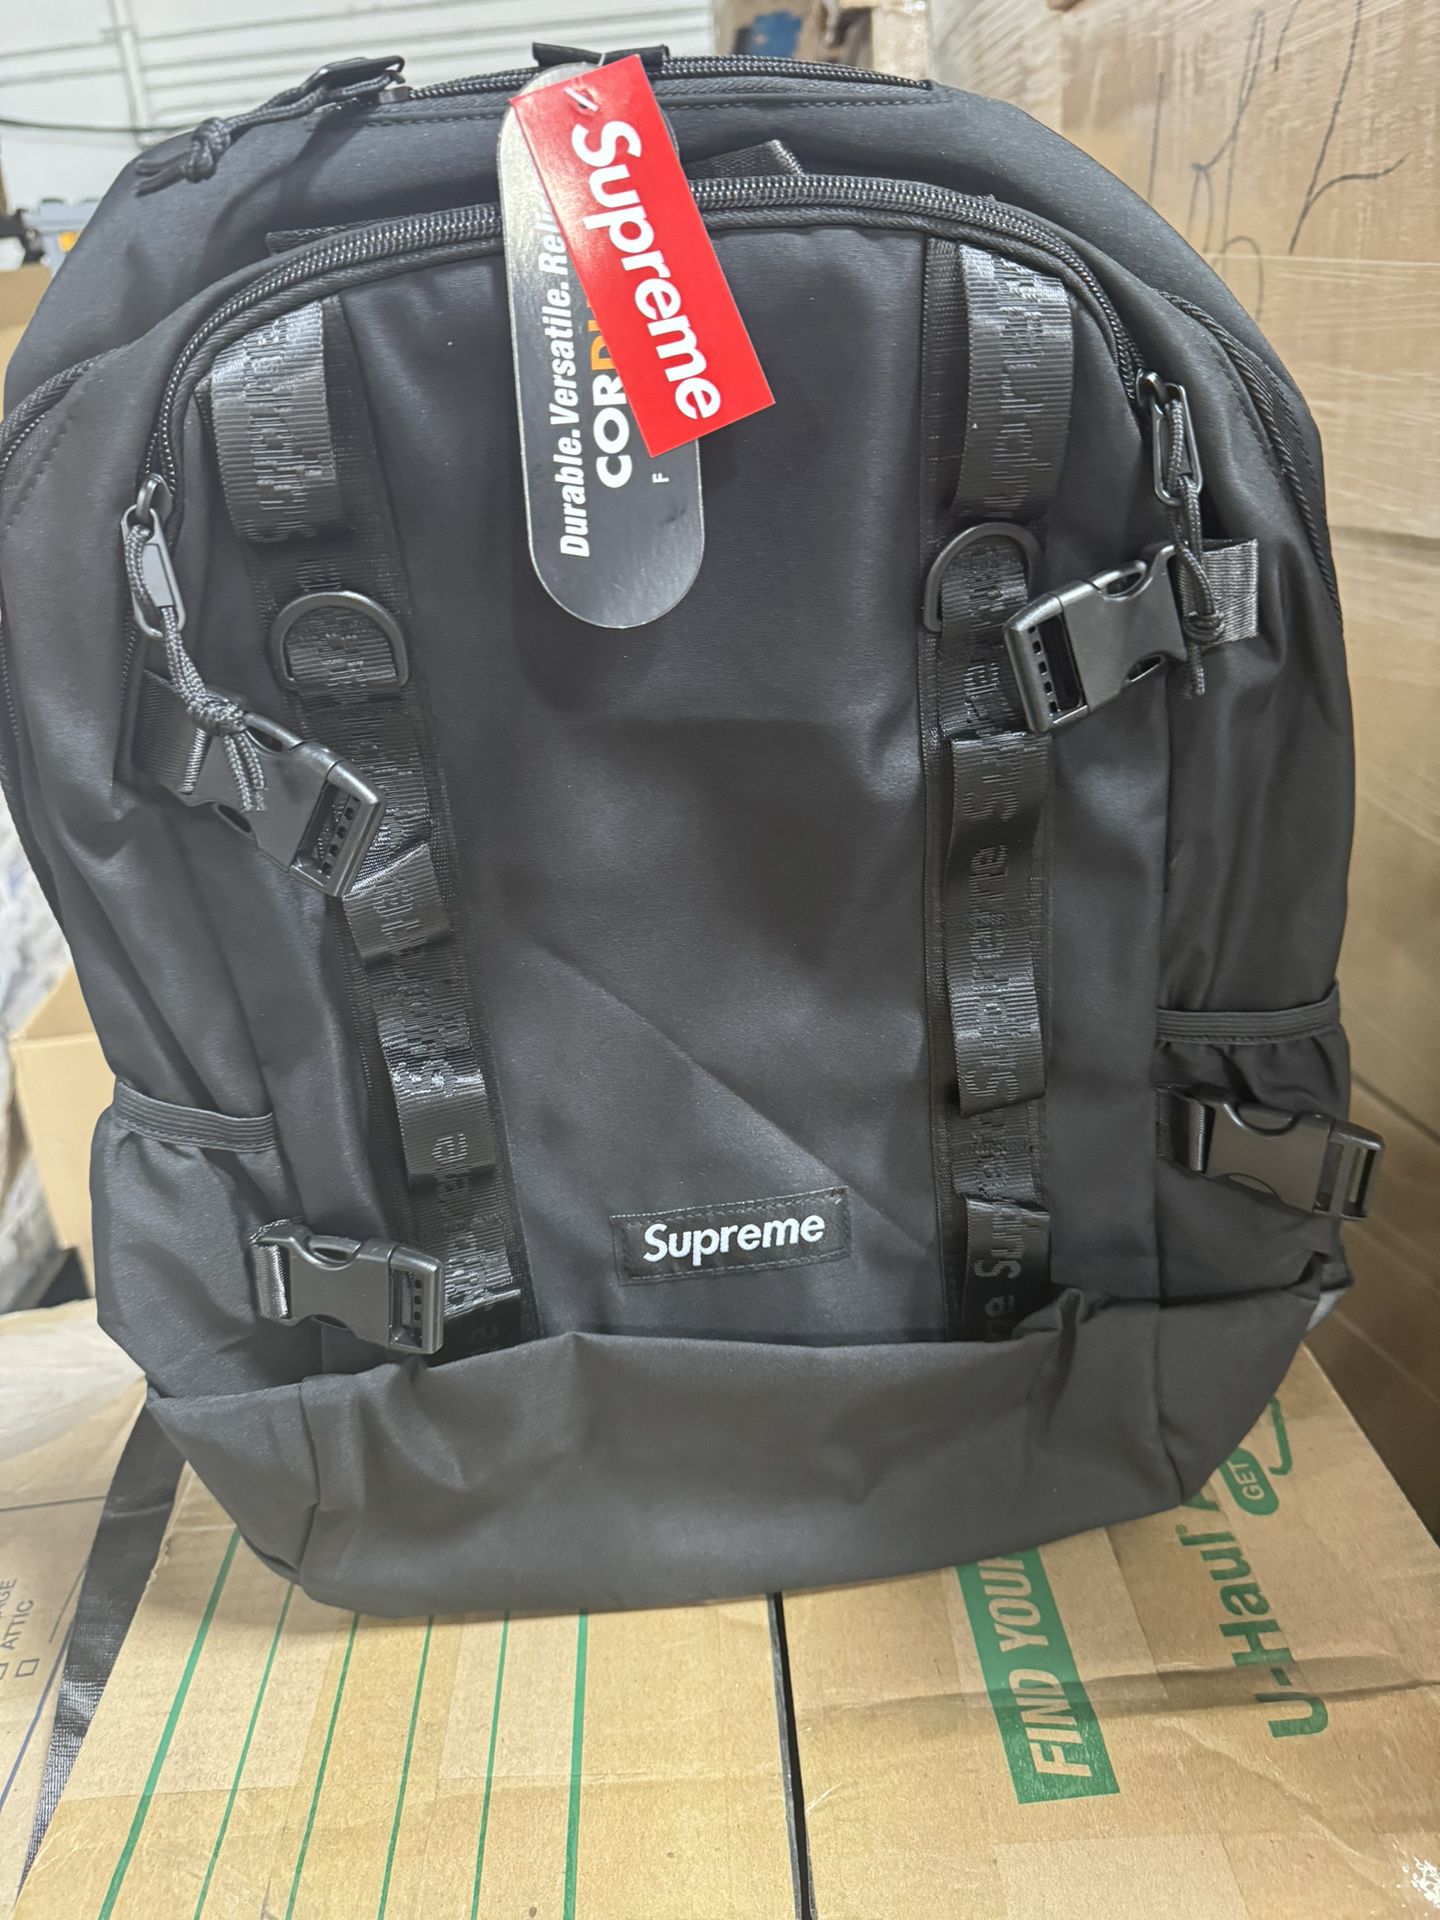 Supreme Backpack $70